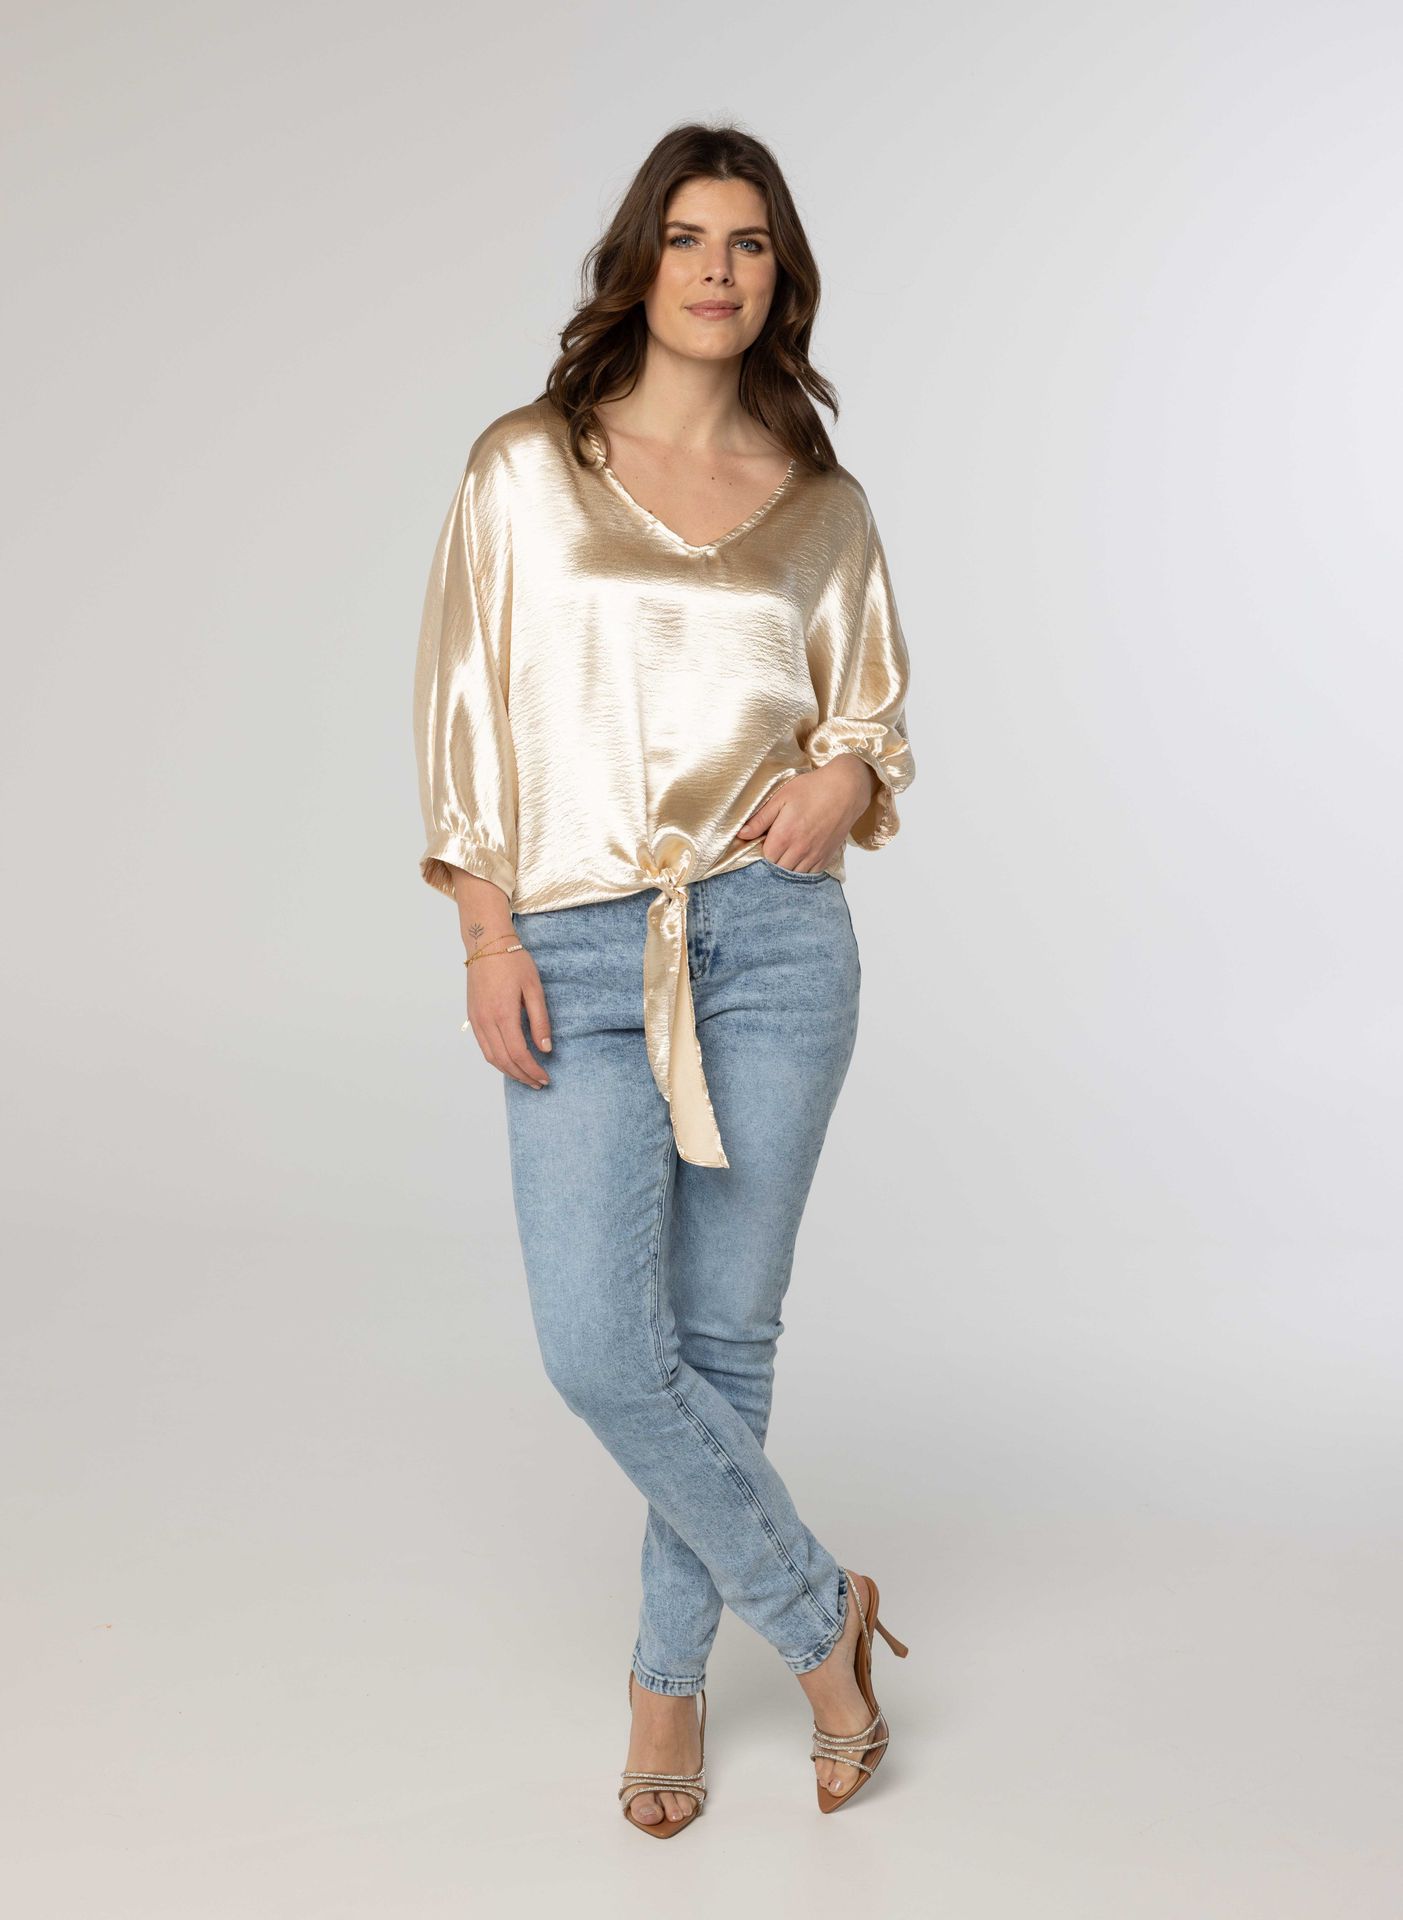 Norah Glanzende blouse in champagnekleur champagne 214098-103